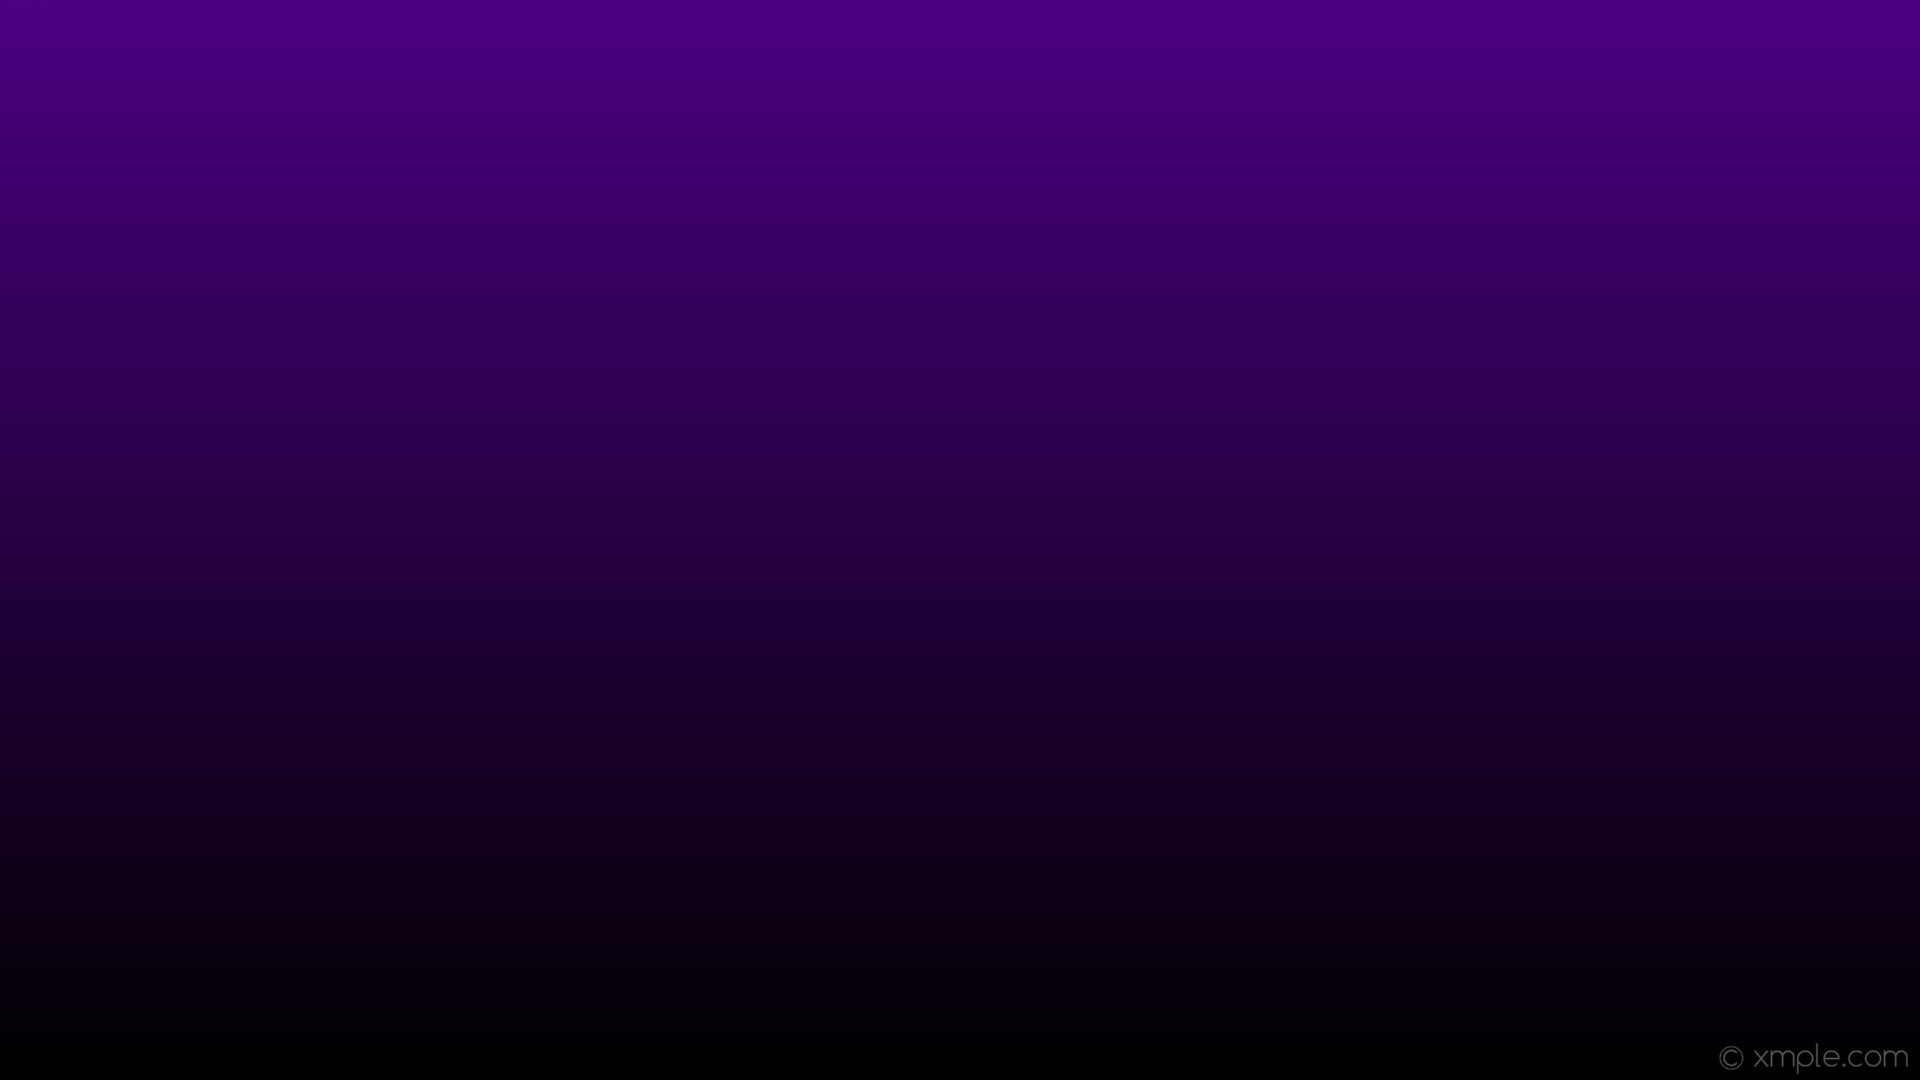 1920x1080 wallpaper black purple gradient linear indigo #000000 #4b0082 270Â°